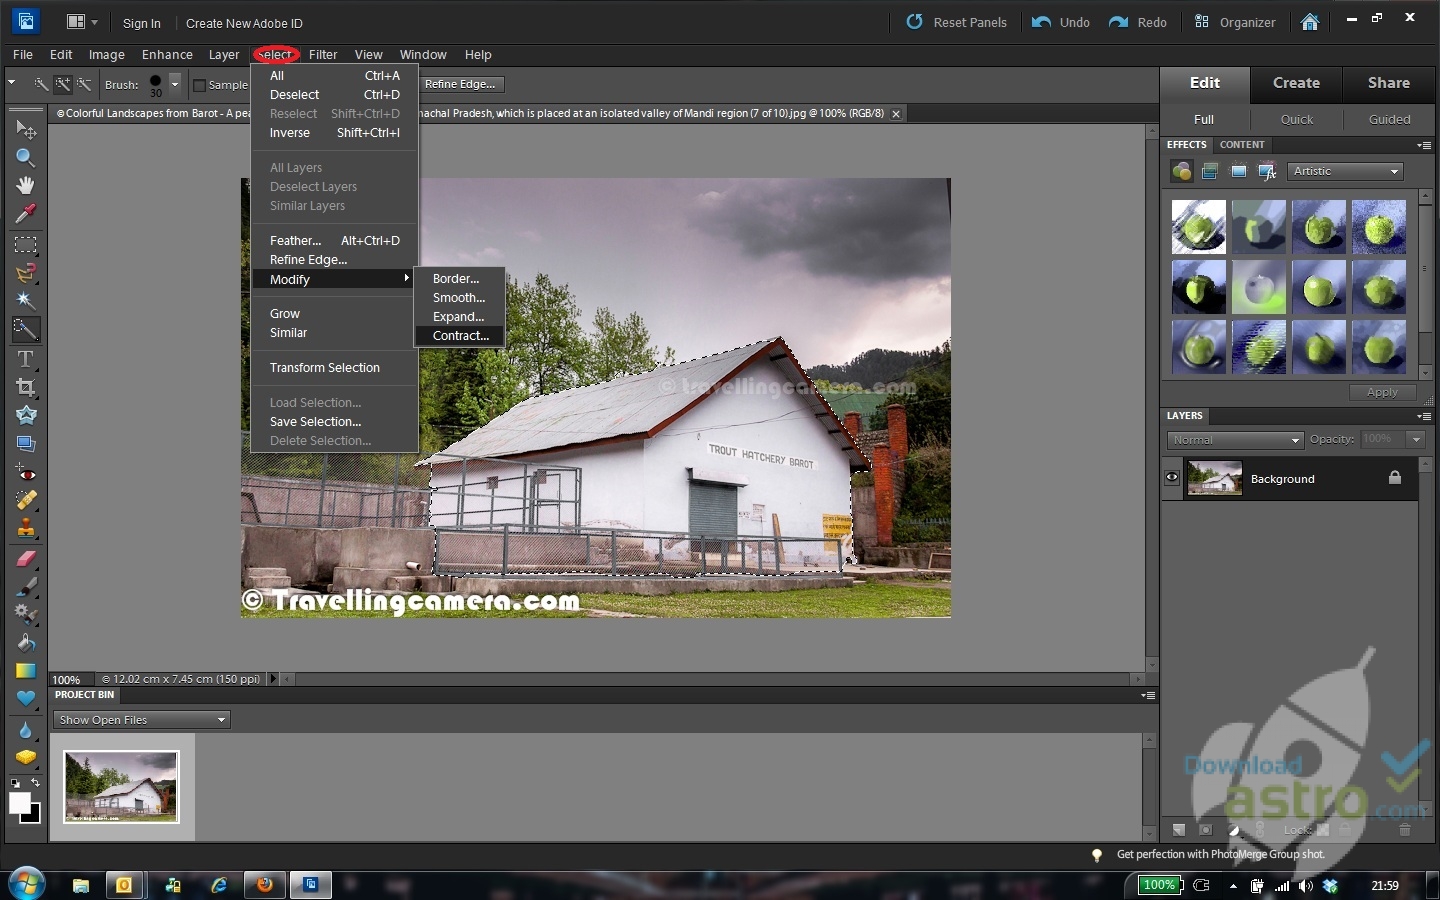 Adobe Photoshop Elements 6 Download